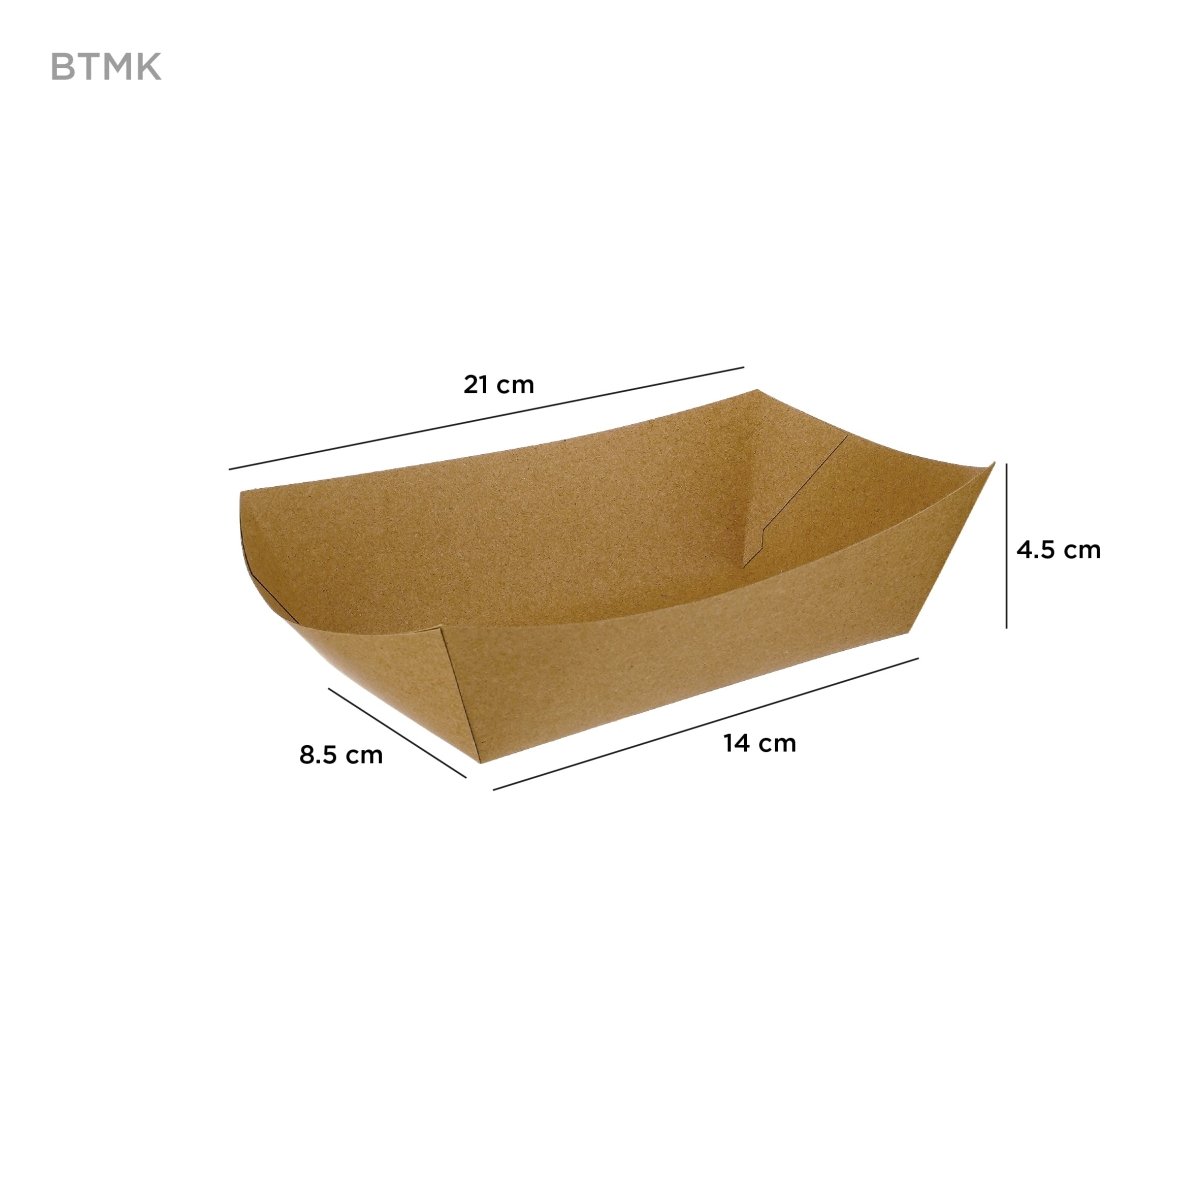 Kraft Paper Boat Tray - hotpackwebstore.com - Paper Trays